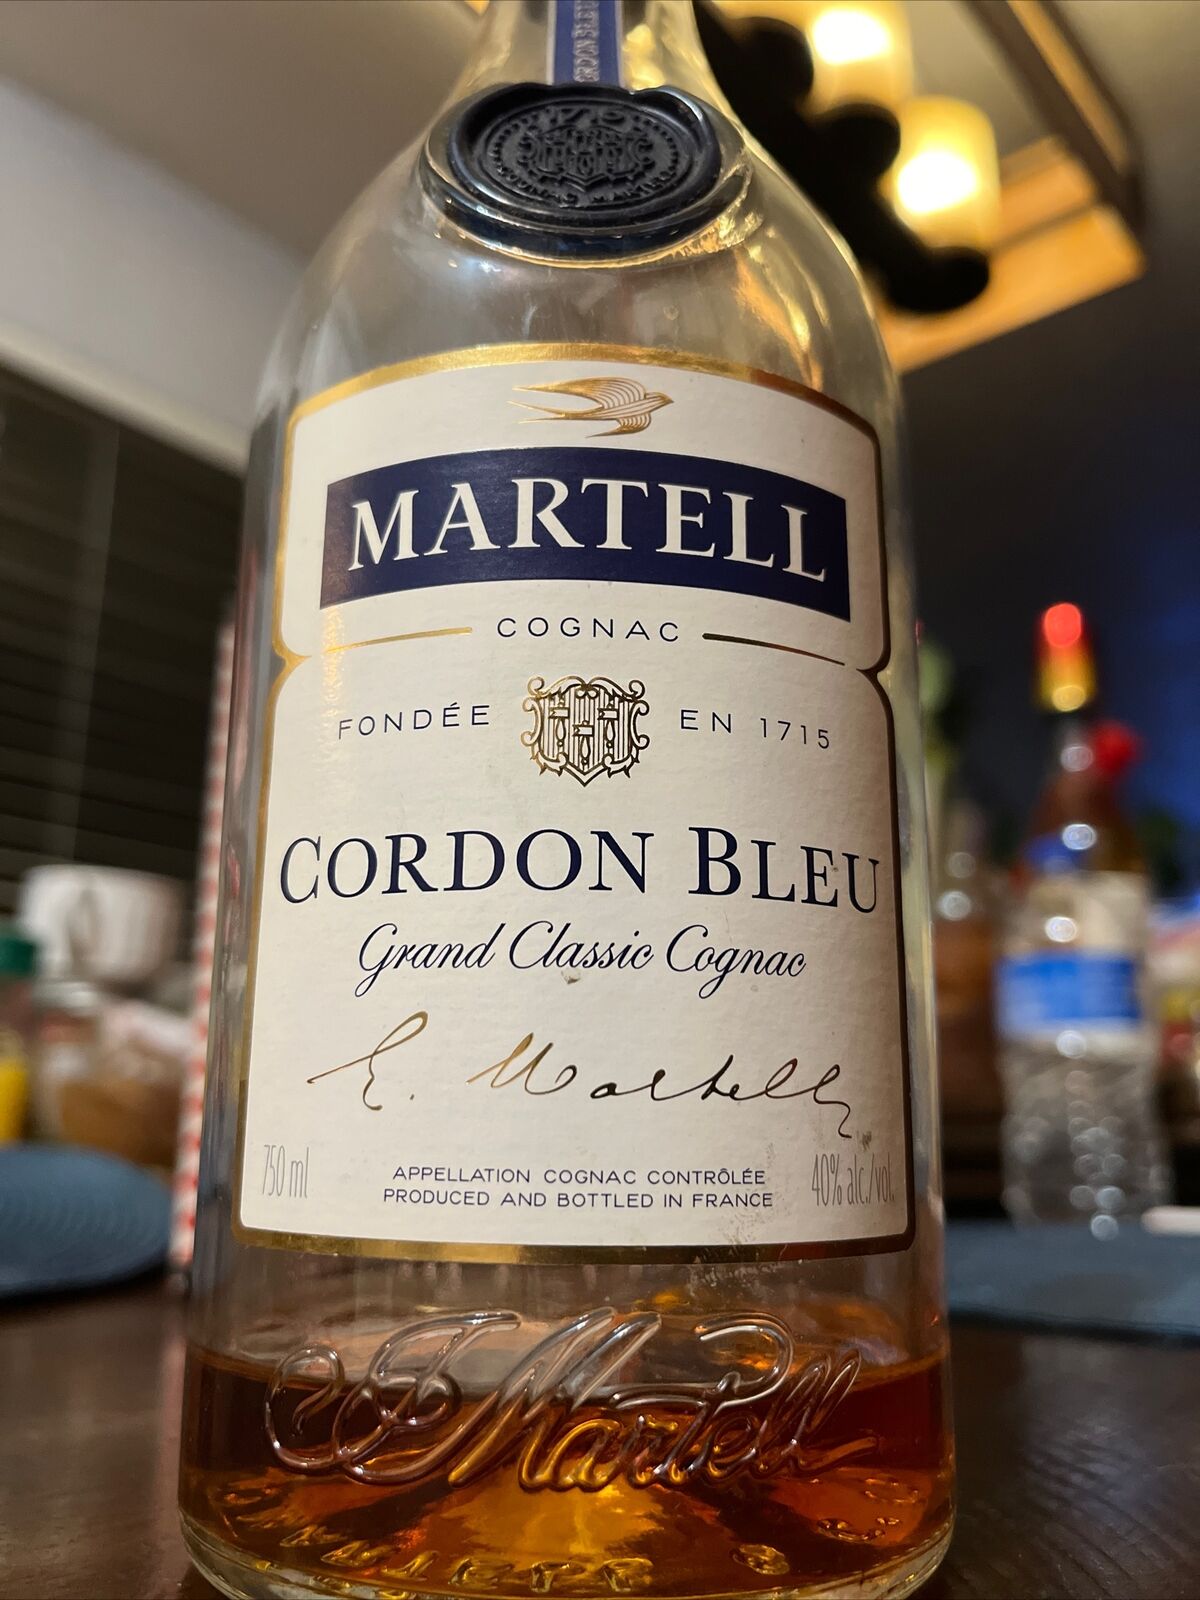 Martell Cordon Bleu Grand Classic Cognac Bottle - Empty